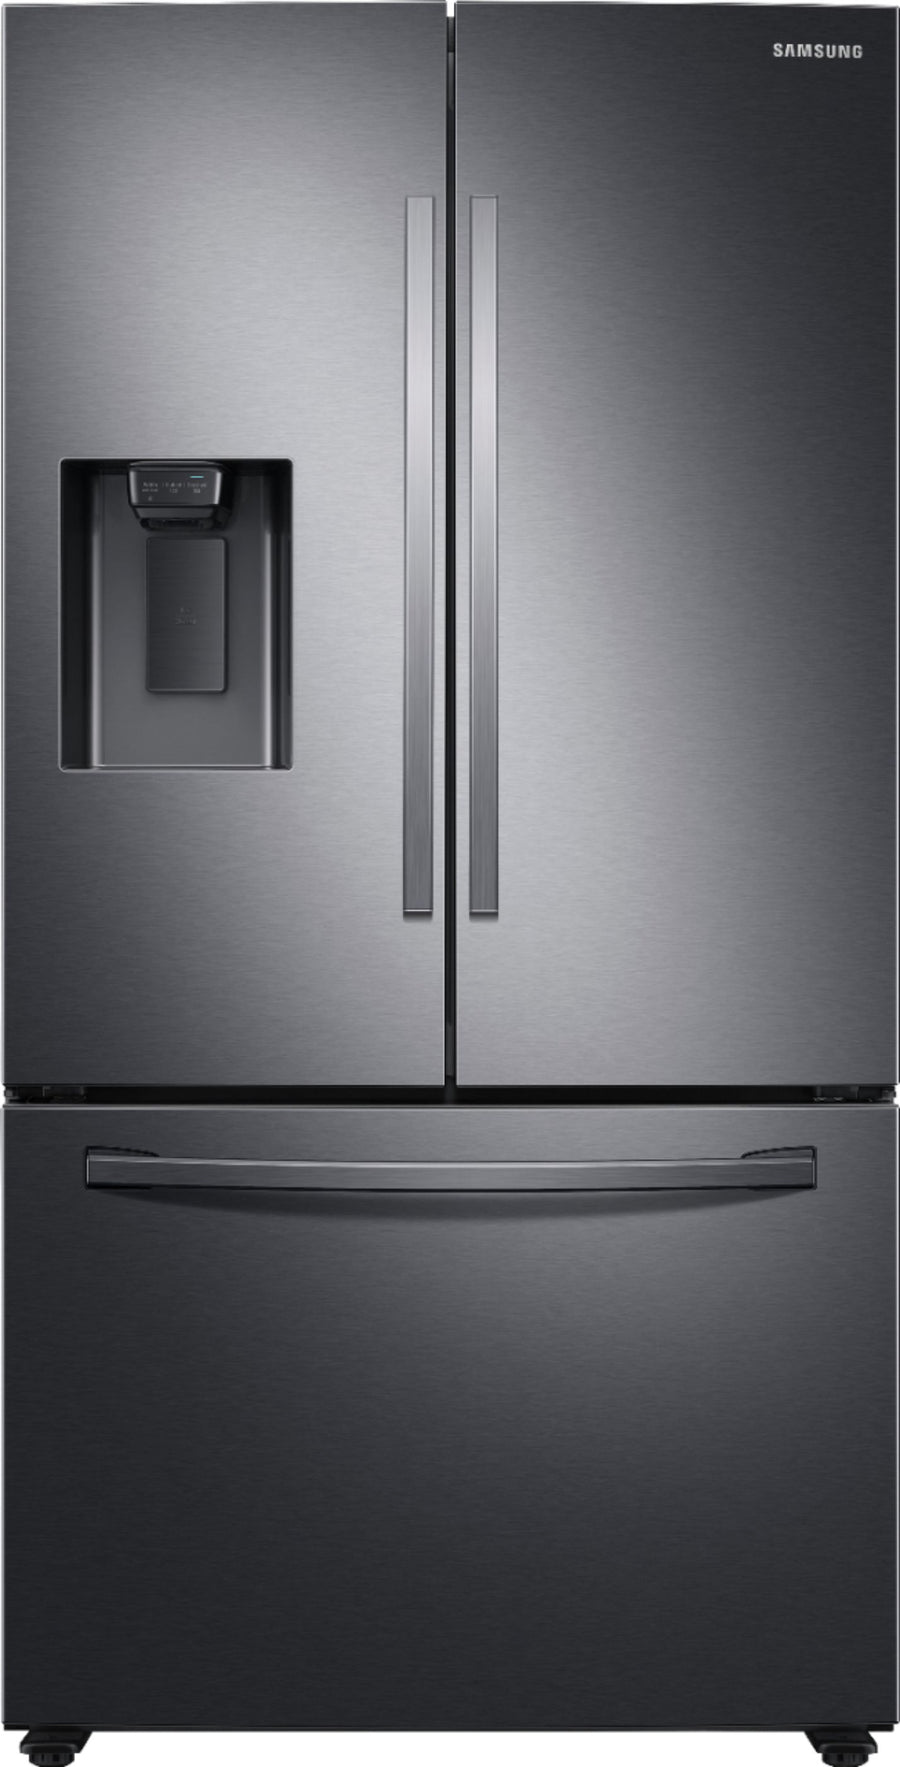 Samsung - 27 cu. ft. Large Capacity 3-Door French Door Refrigerator with External Water & Ice Dispenser - Black stainless steel_0